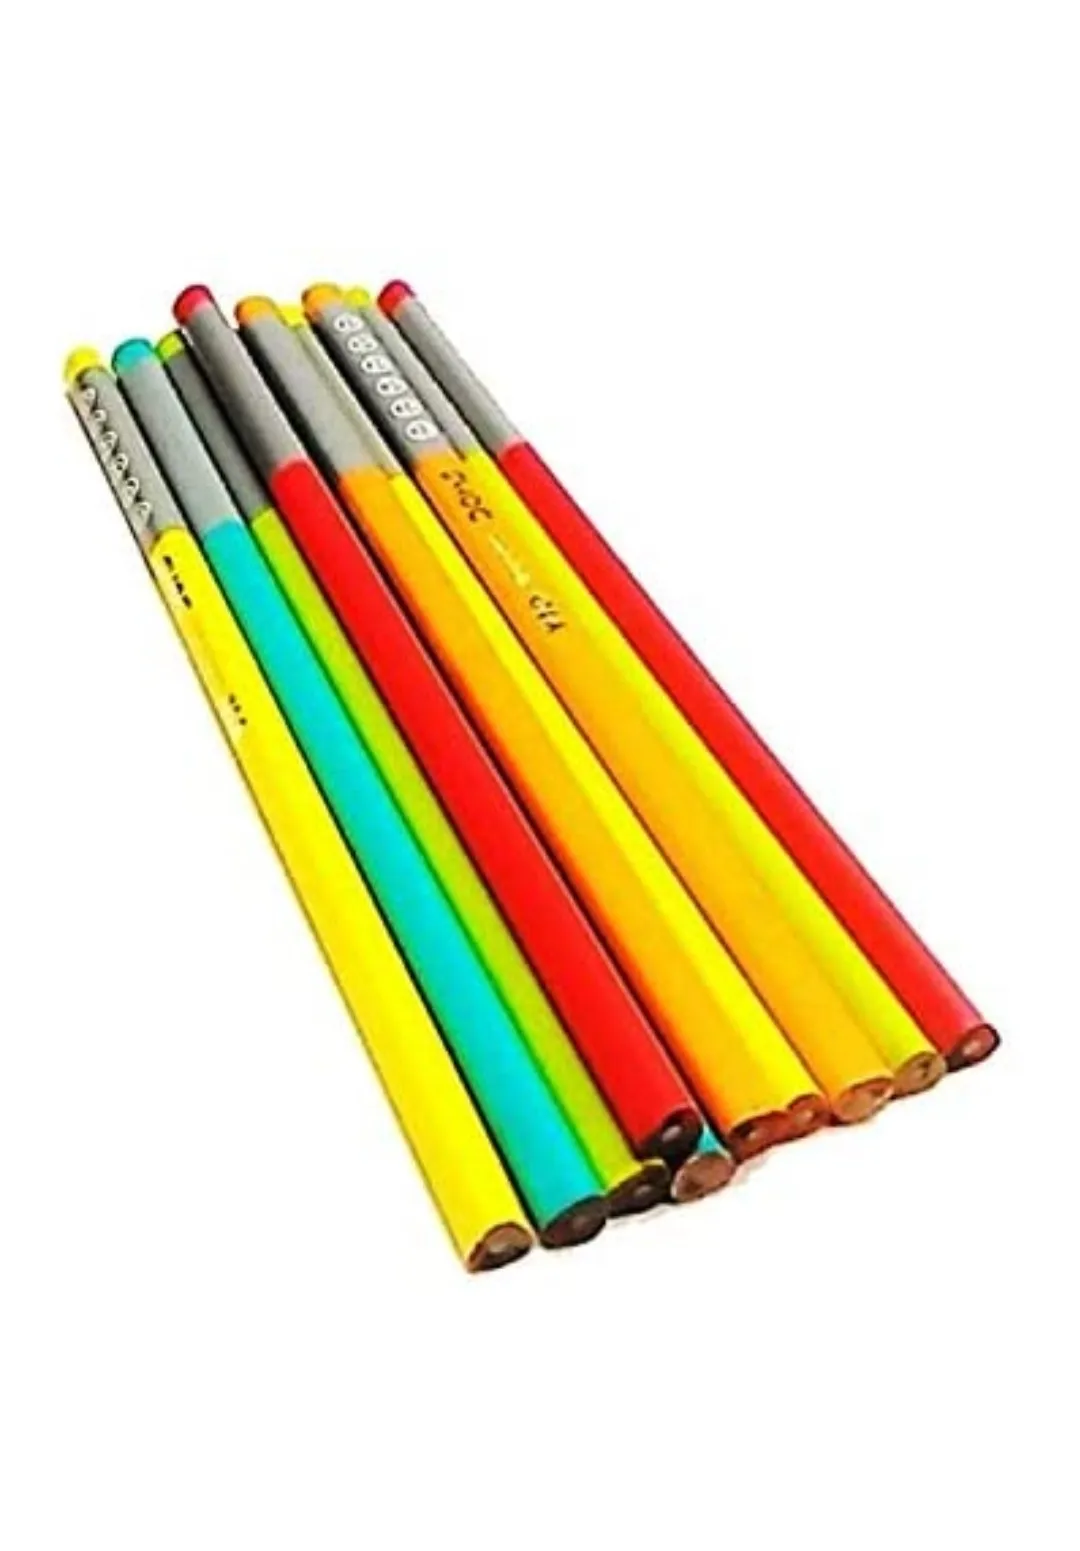 Doms Y1 Plus Pencil 5 Pack of 10 Pencils(50 Pencils)